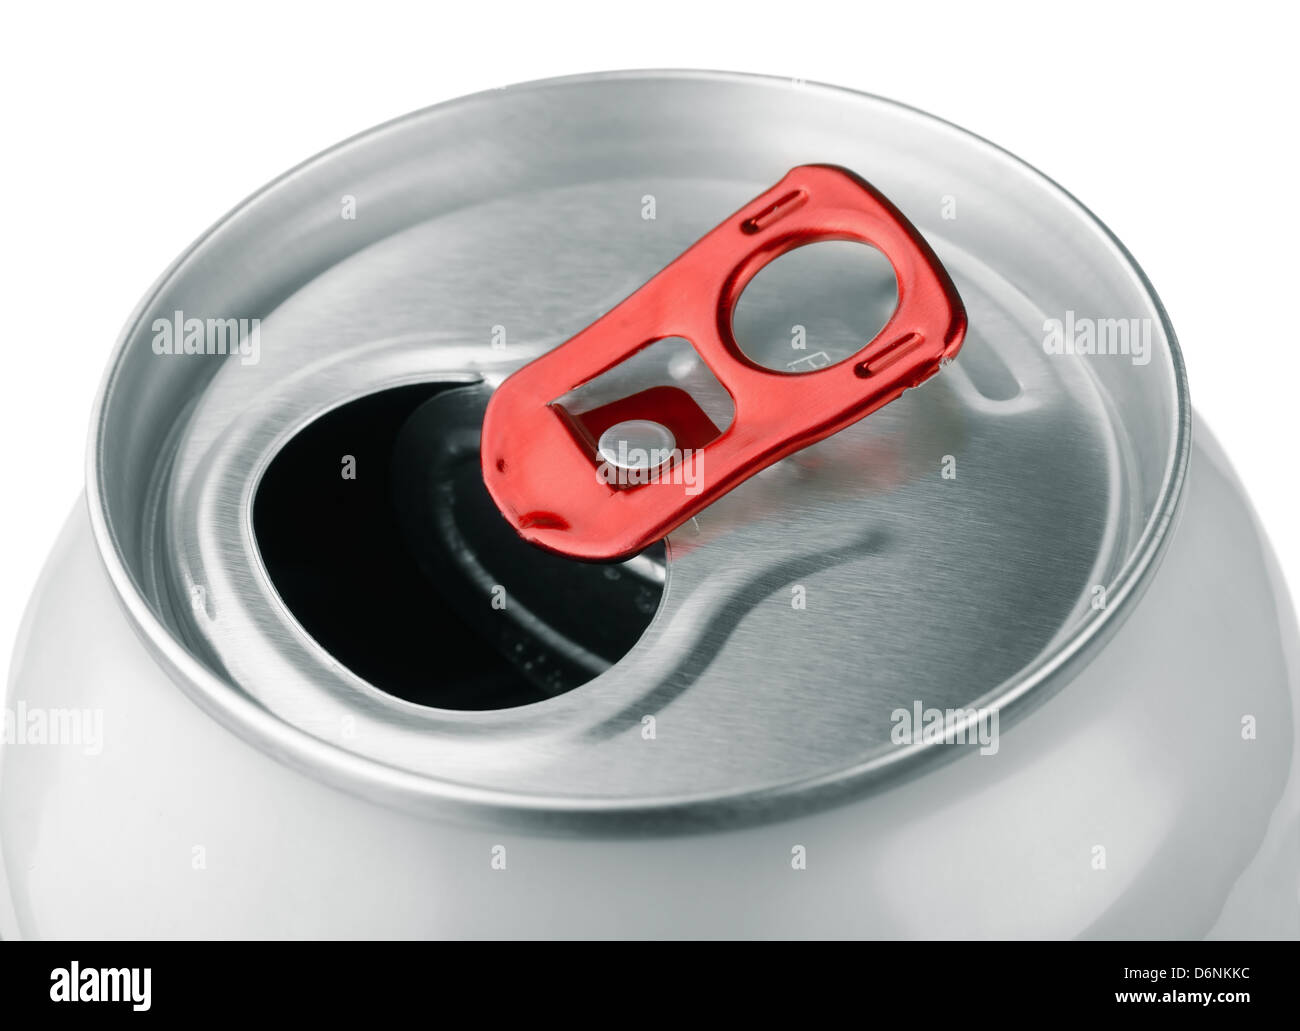 Close-up of open aluminum soda can Stock Photo